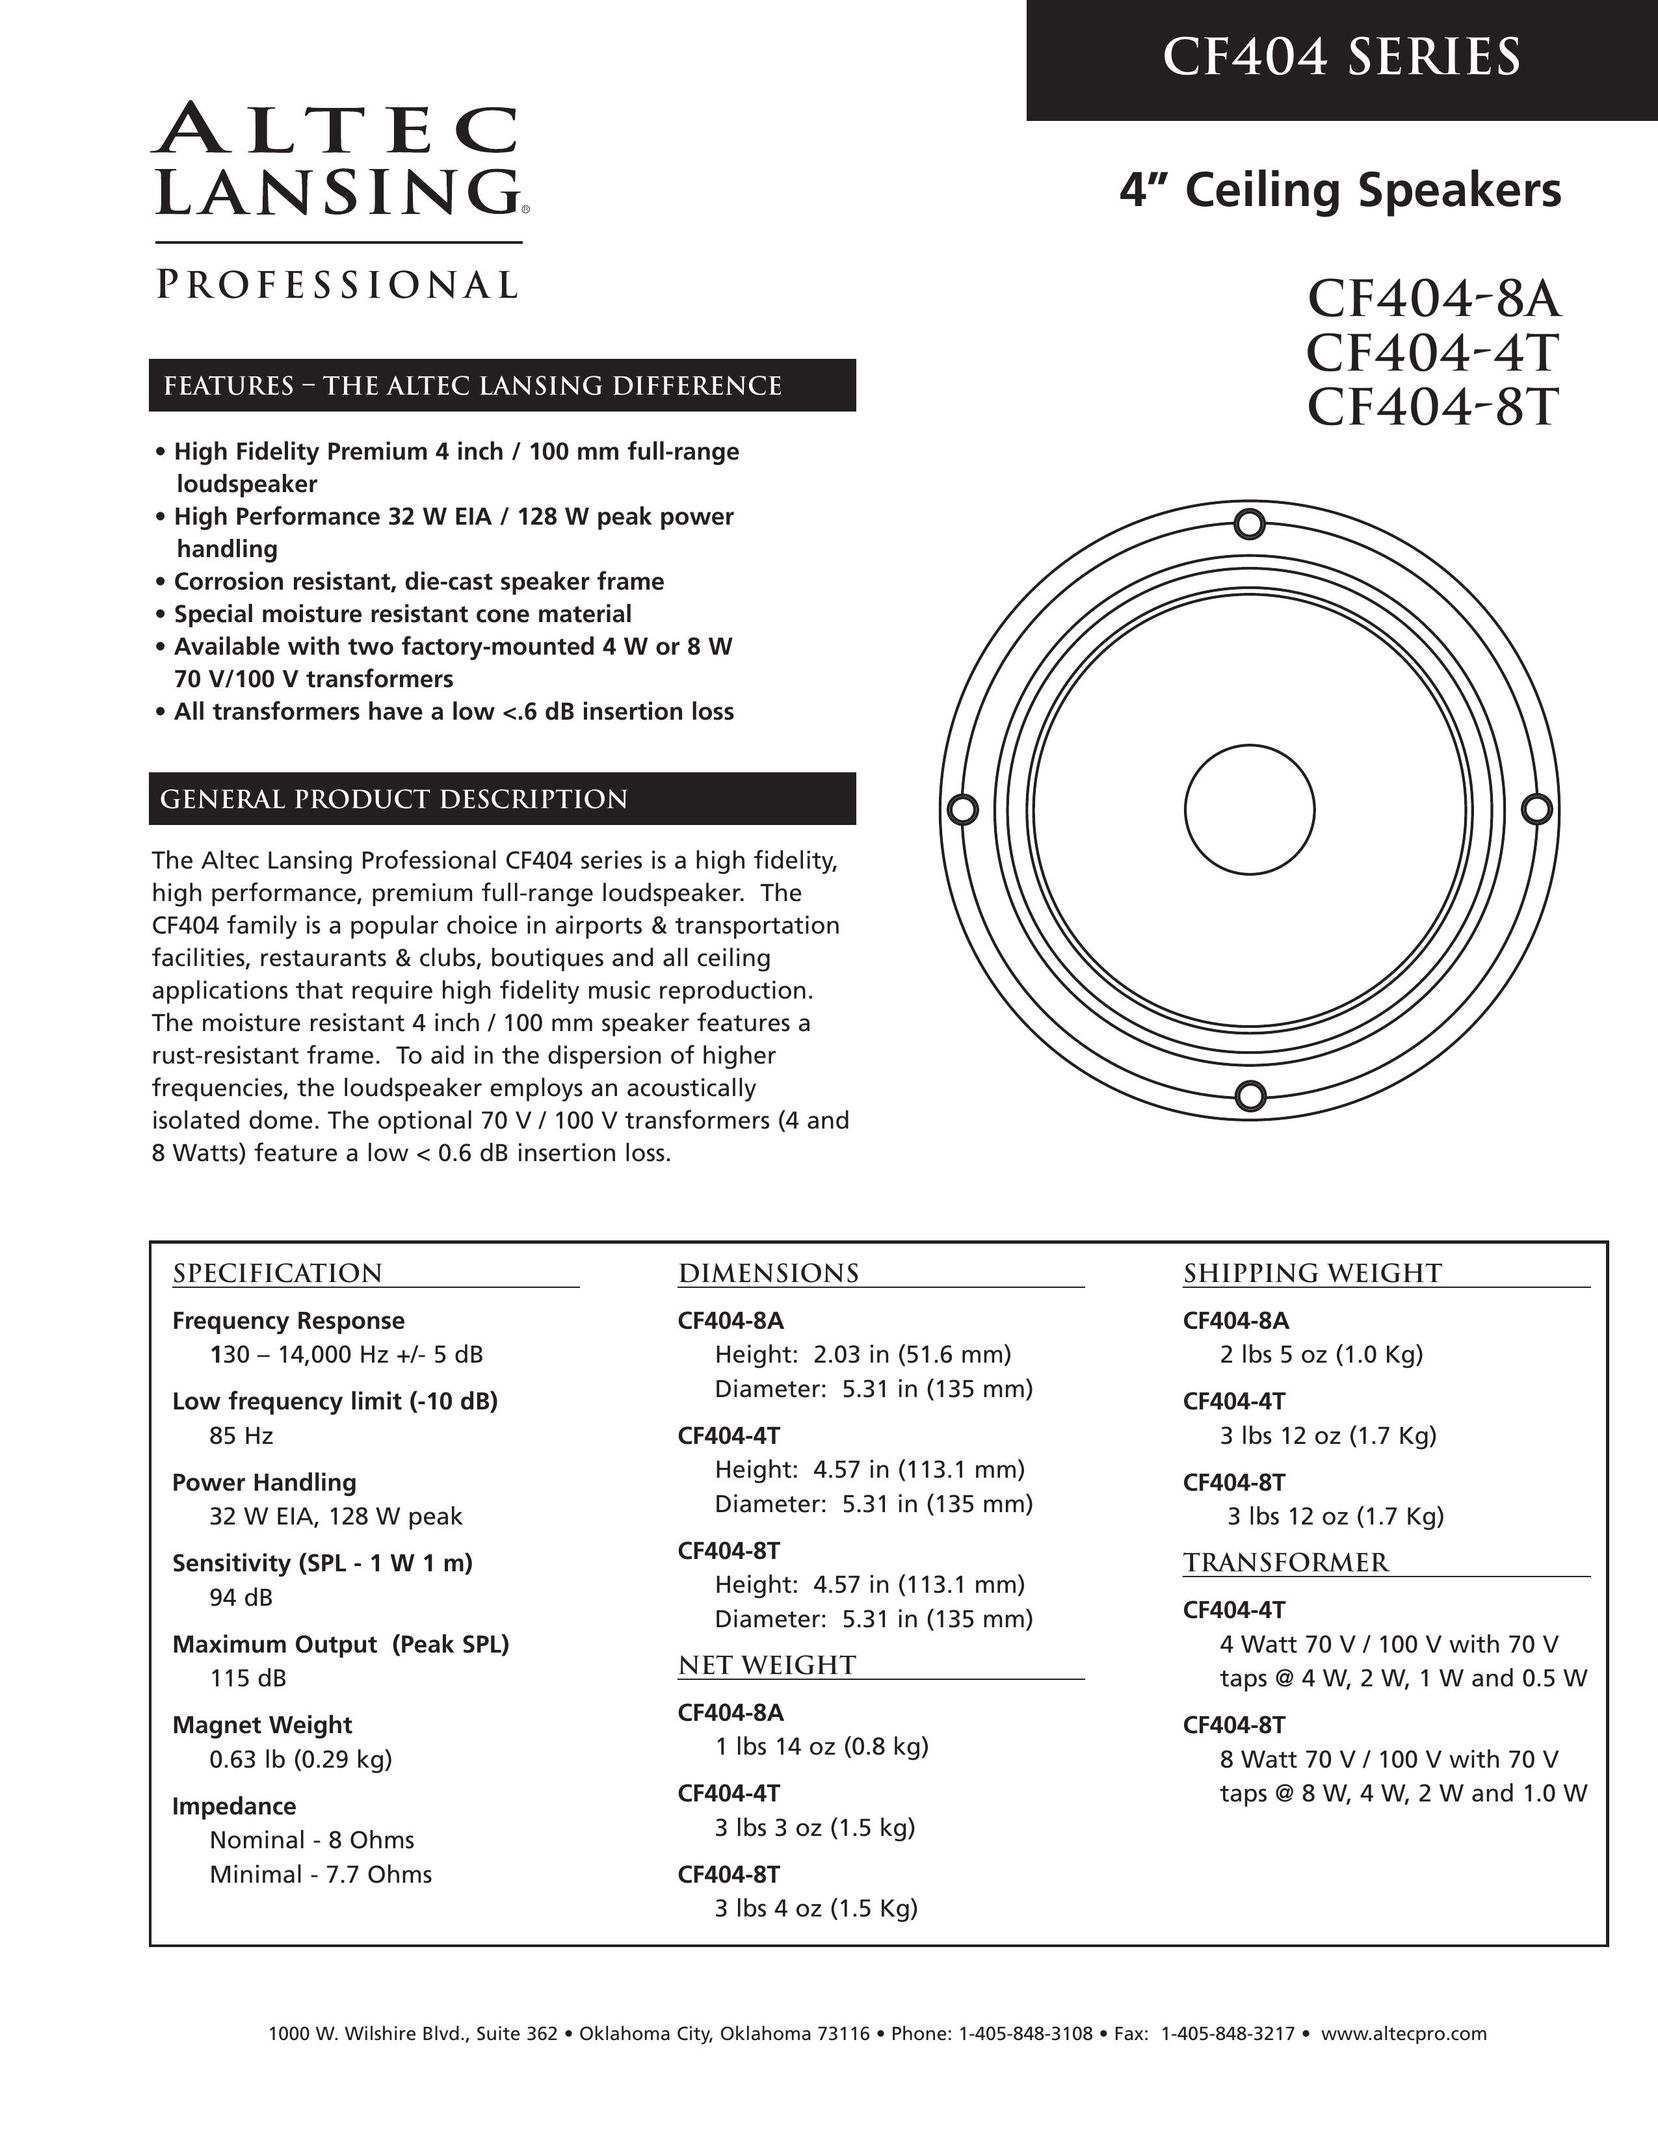 Altec Lansing CF404-8T Speaker User Manual